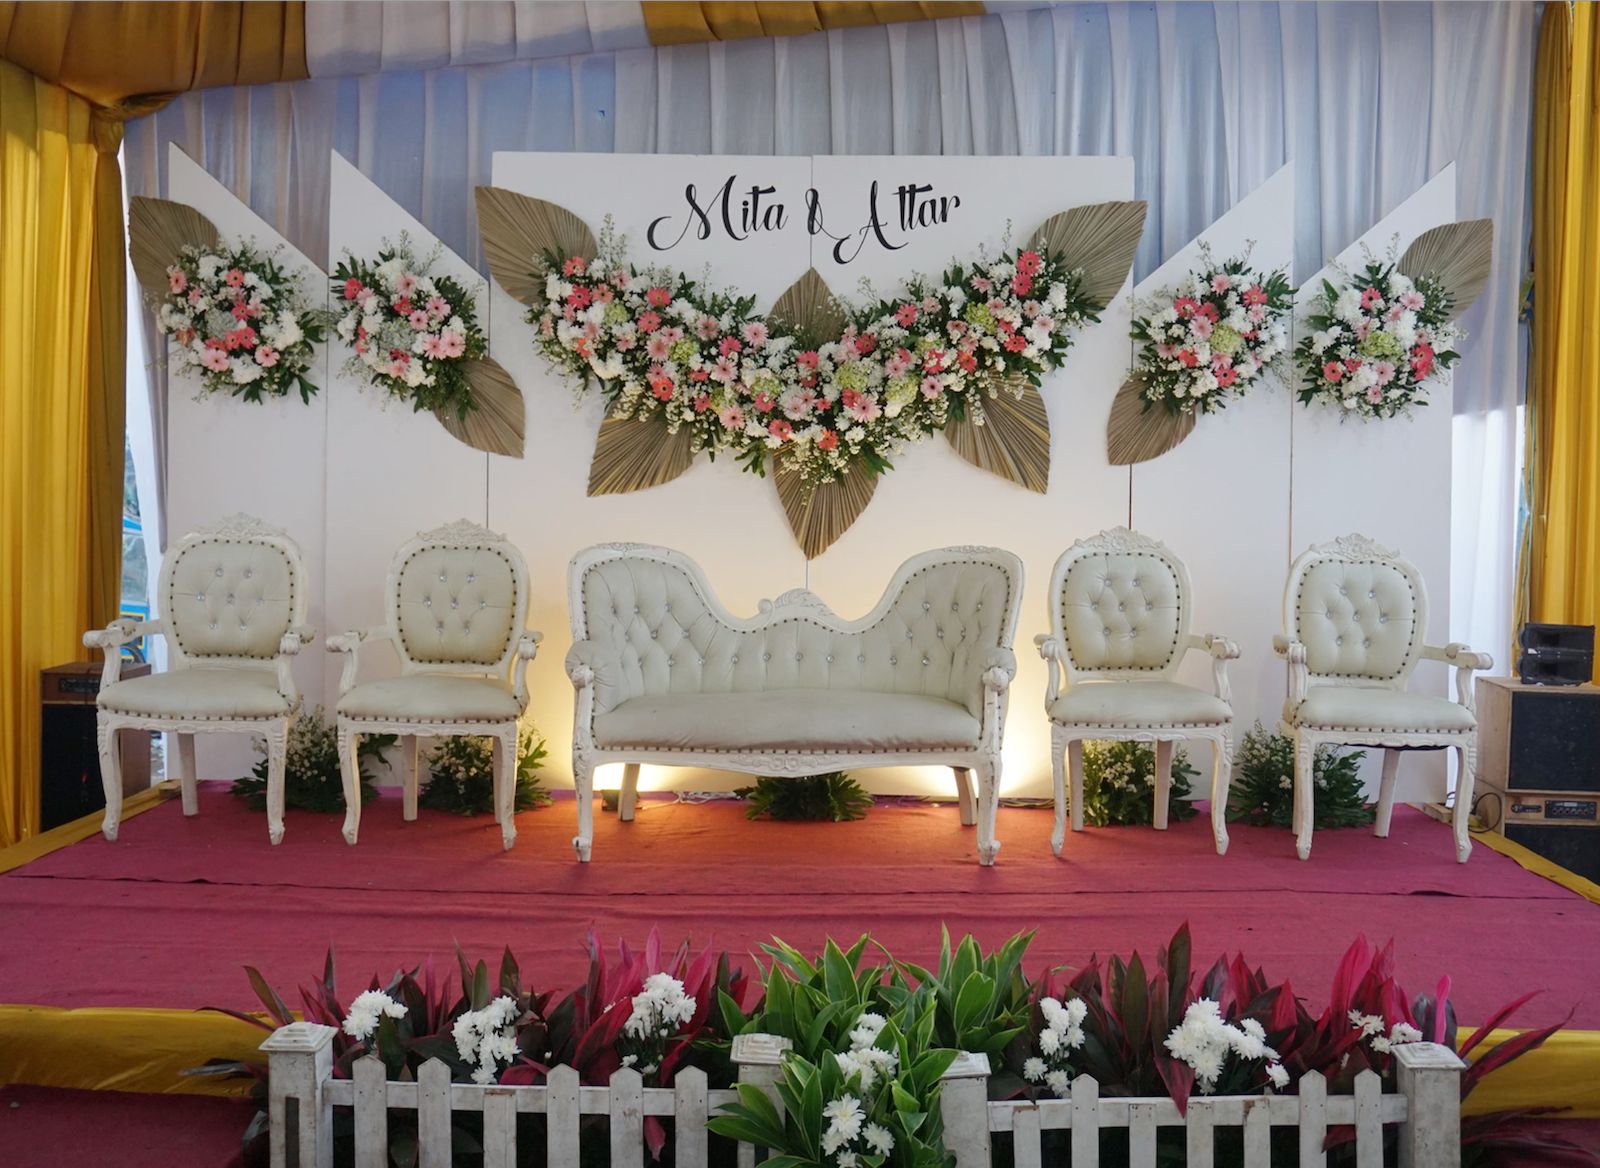 PAKET WEDDING PALING MURAH KRAMAT PELA MELAWAI JAKARTA